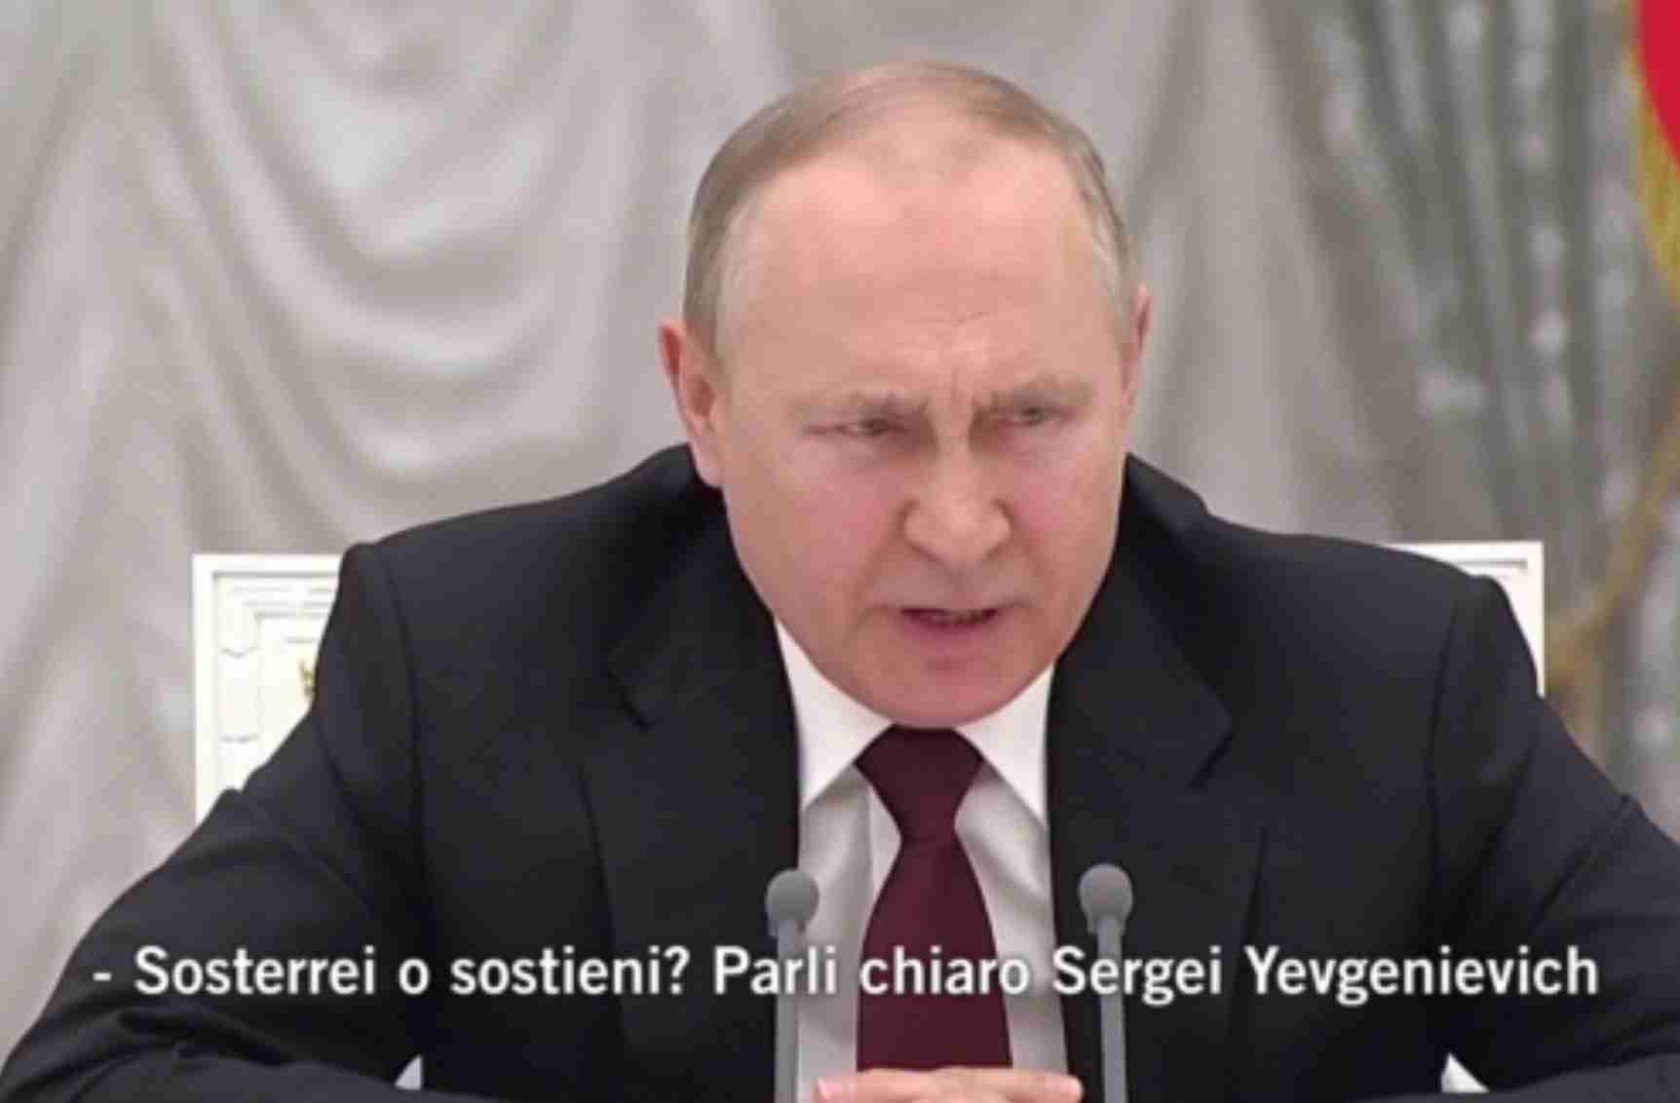 Vladimir, repressione interna  ed esterna